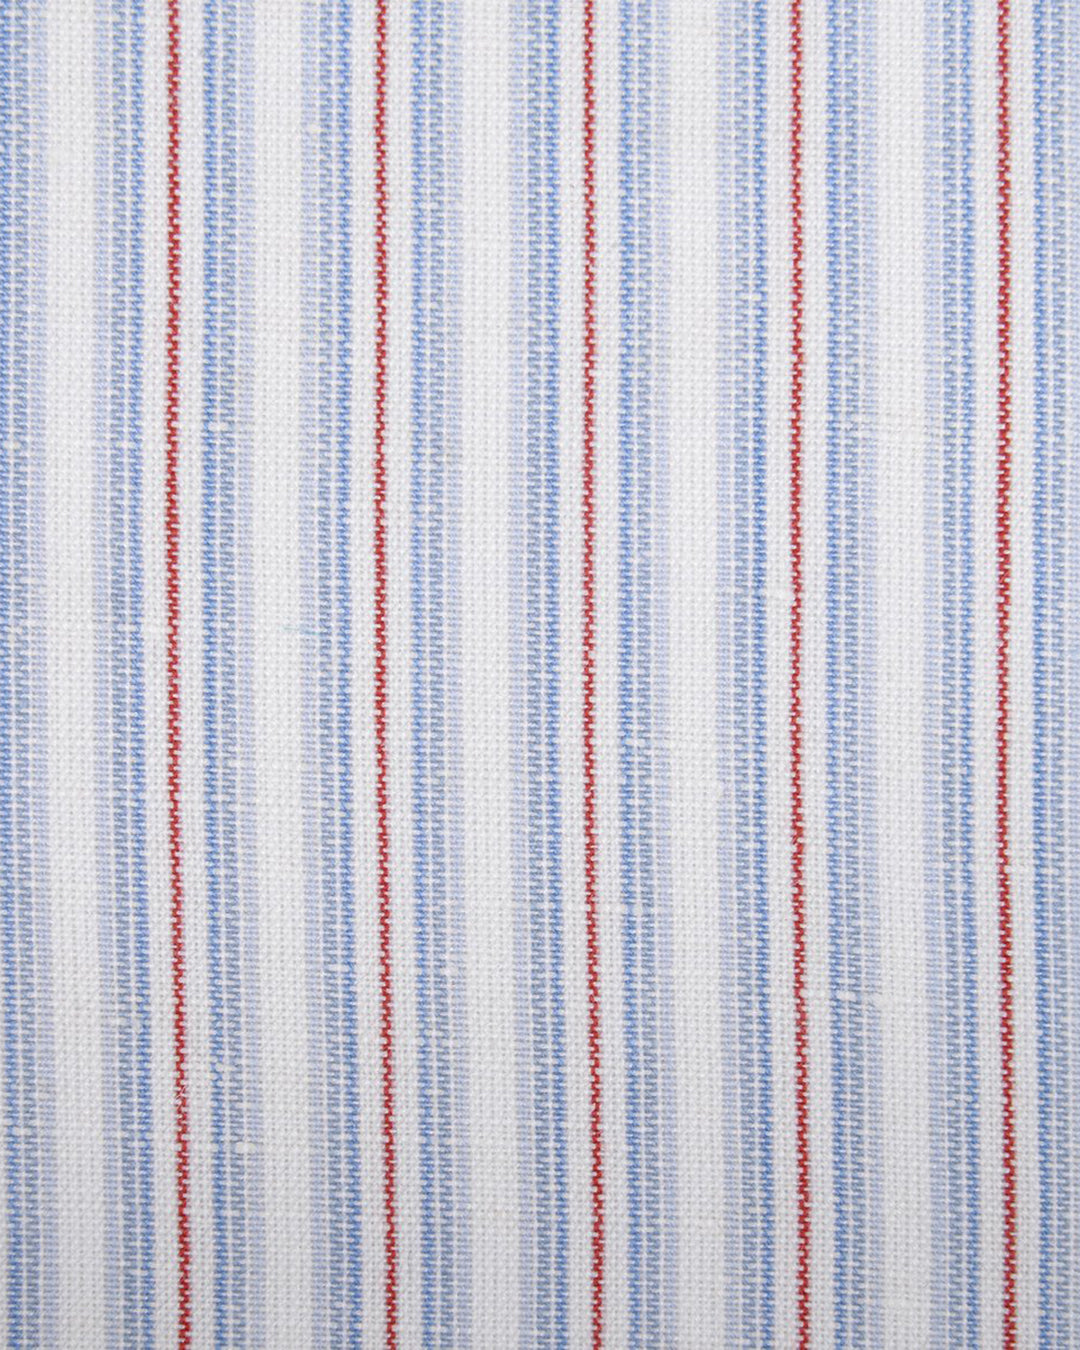 Cotton Linen: Blue Red Alternate Stripes